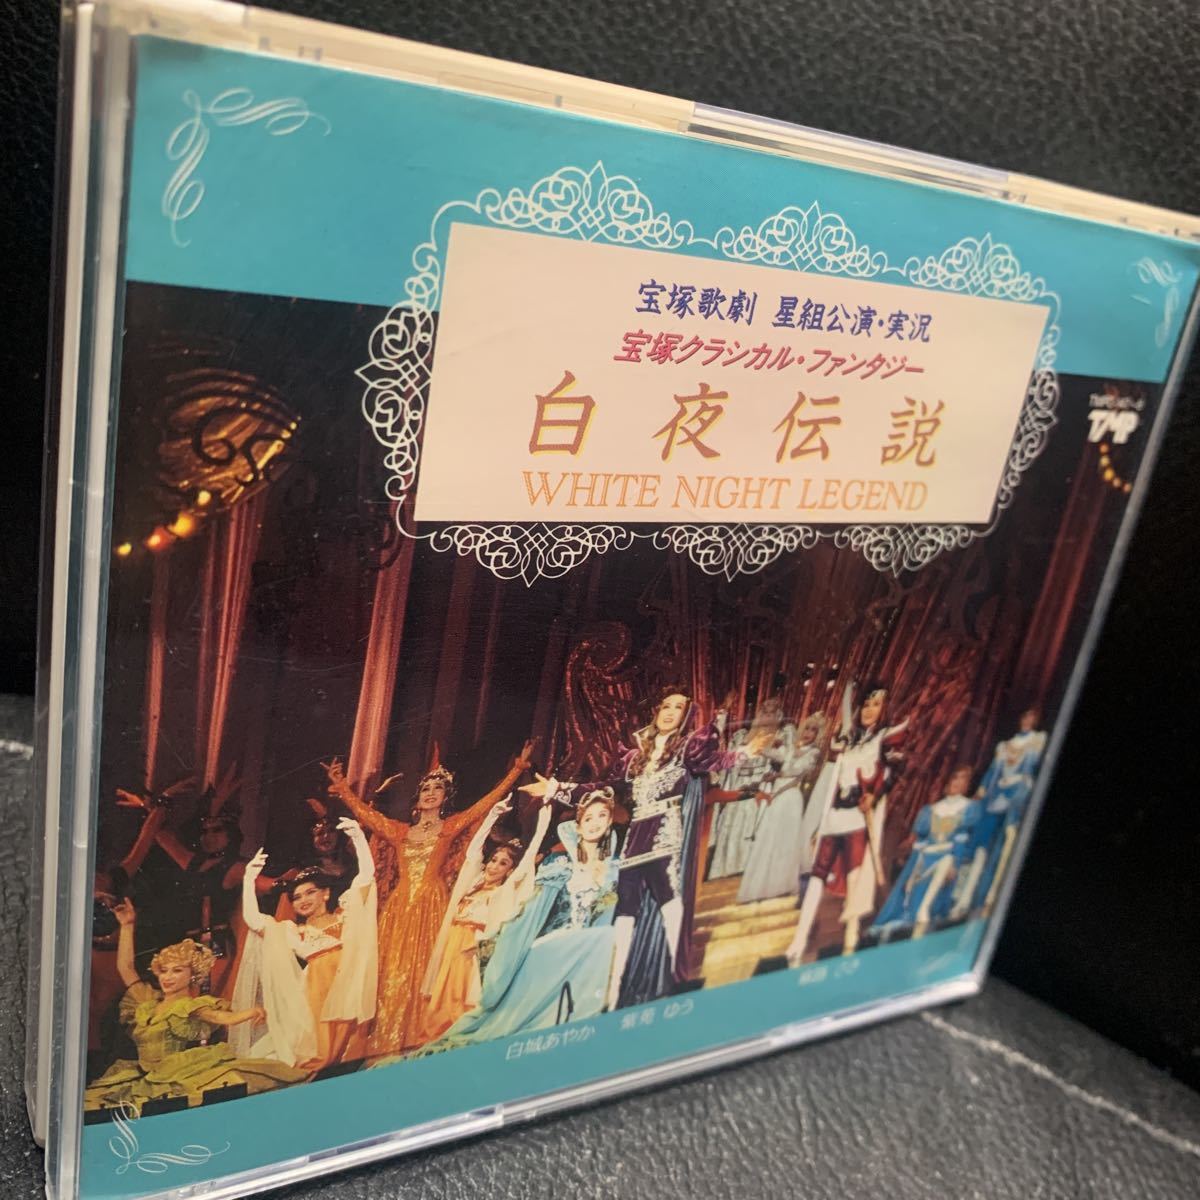 CD Takarazuka .. звезда комплект .. реальный . Takarazuka классический фэнтези Byakuya легенда one Night * Mirage CD2 листов комплект 